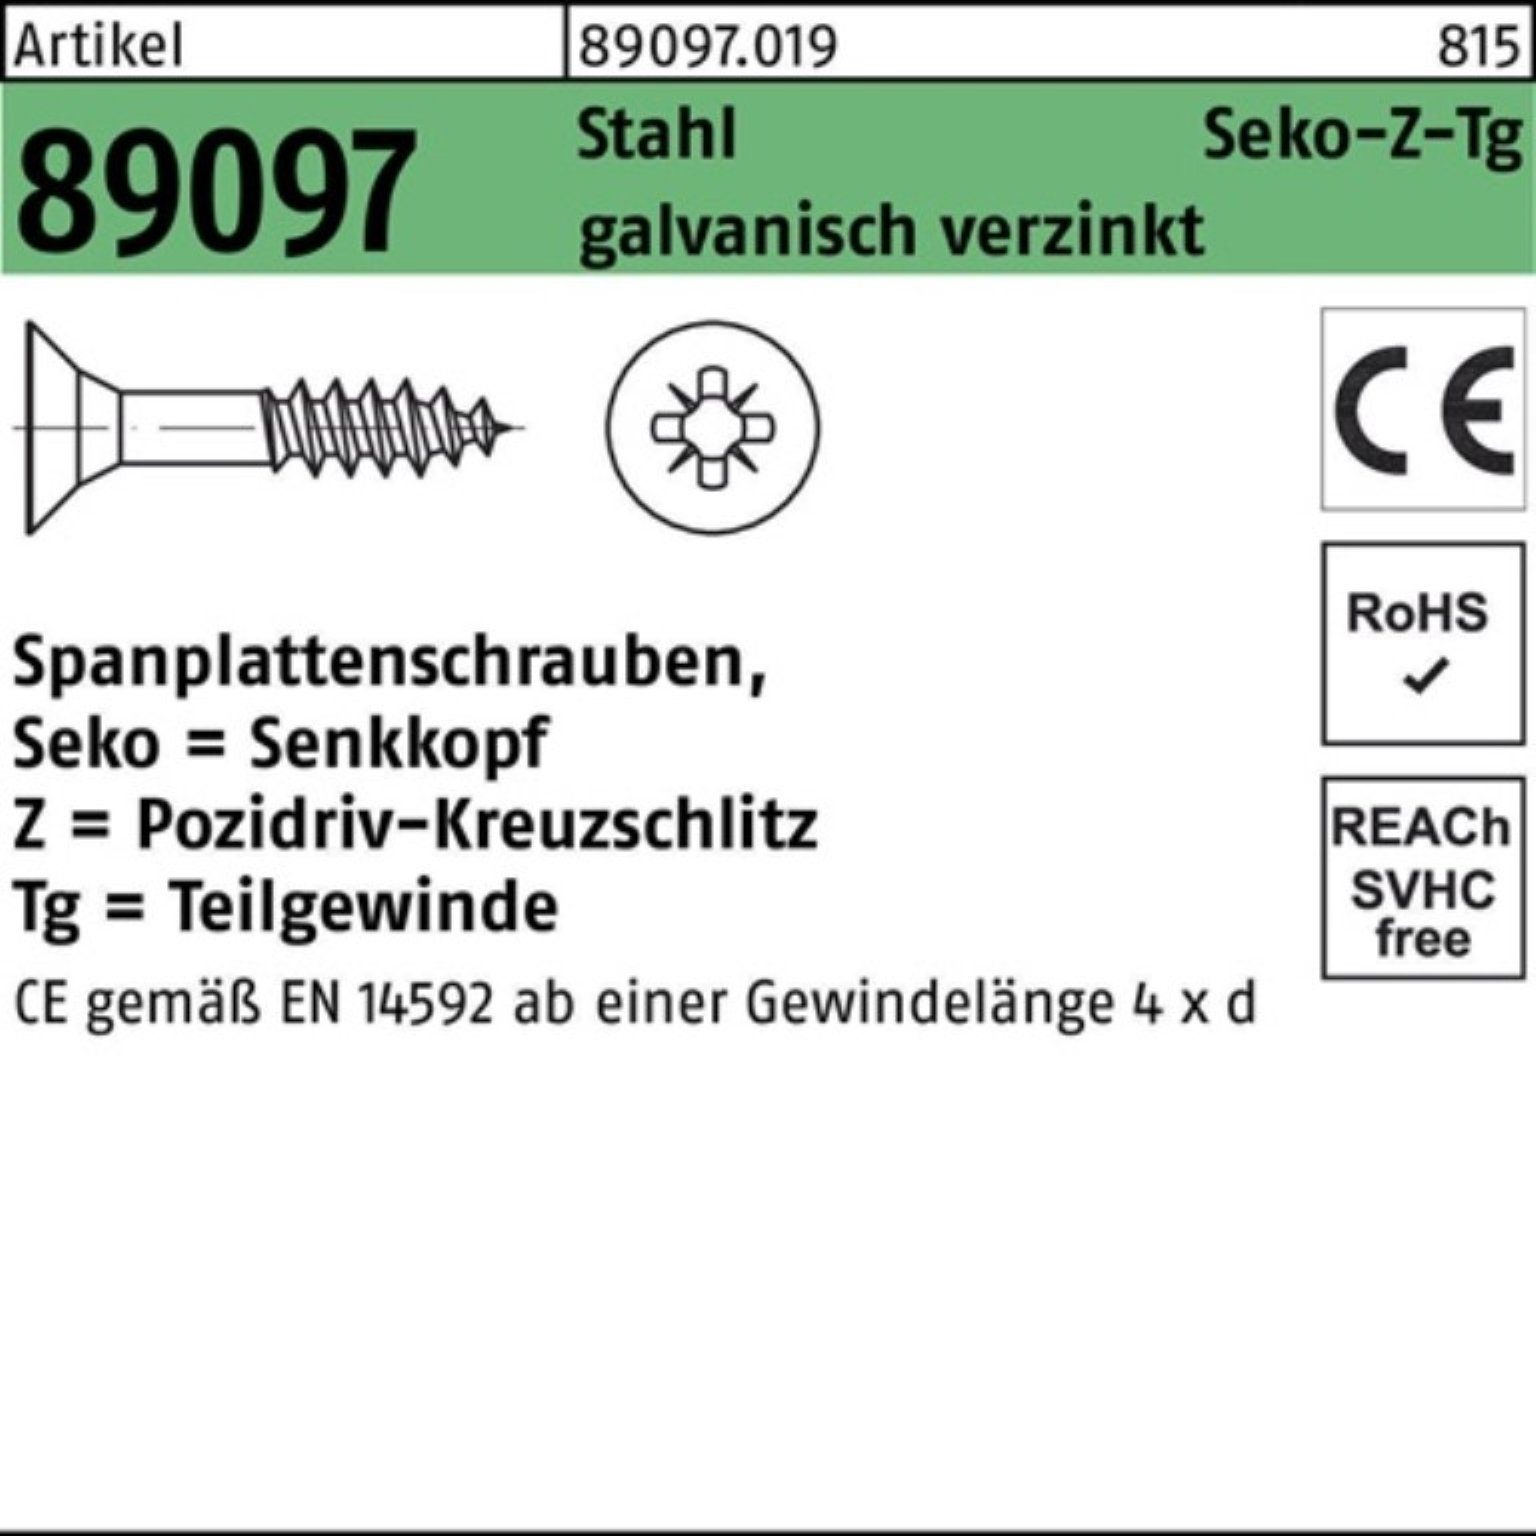 Reyher Stahl R gal Spanplattenschraube PZ 89097 TG 6x110/70-Z SEKO 100er Spanplattenschraube Pack